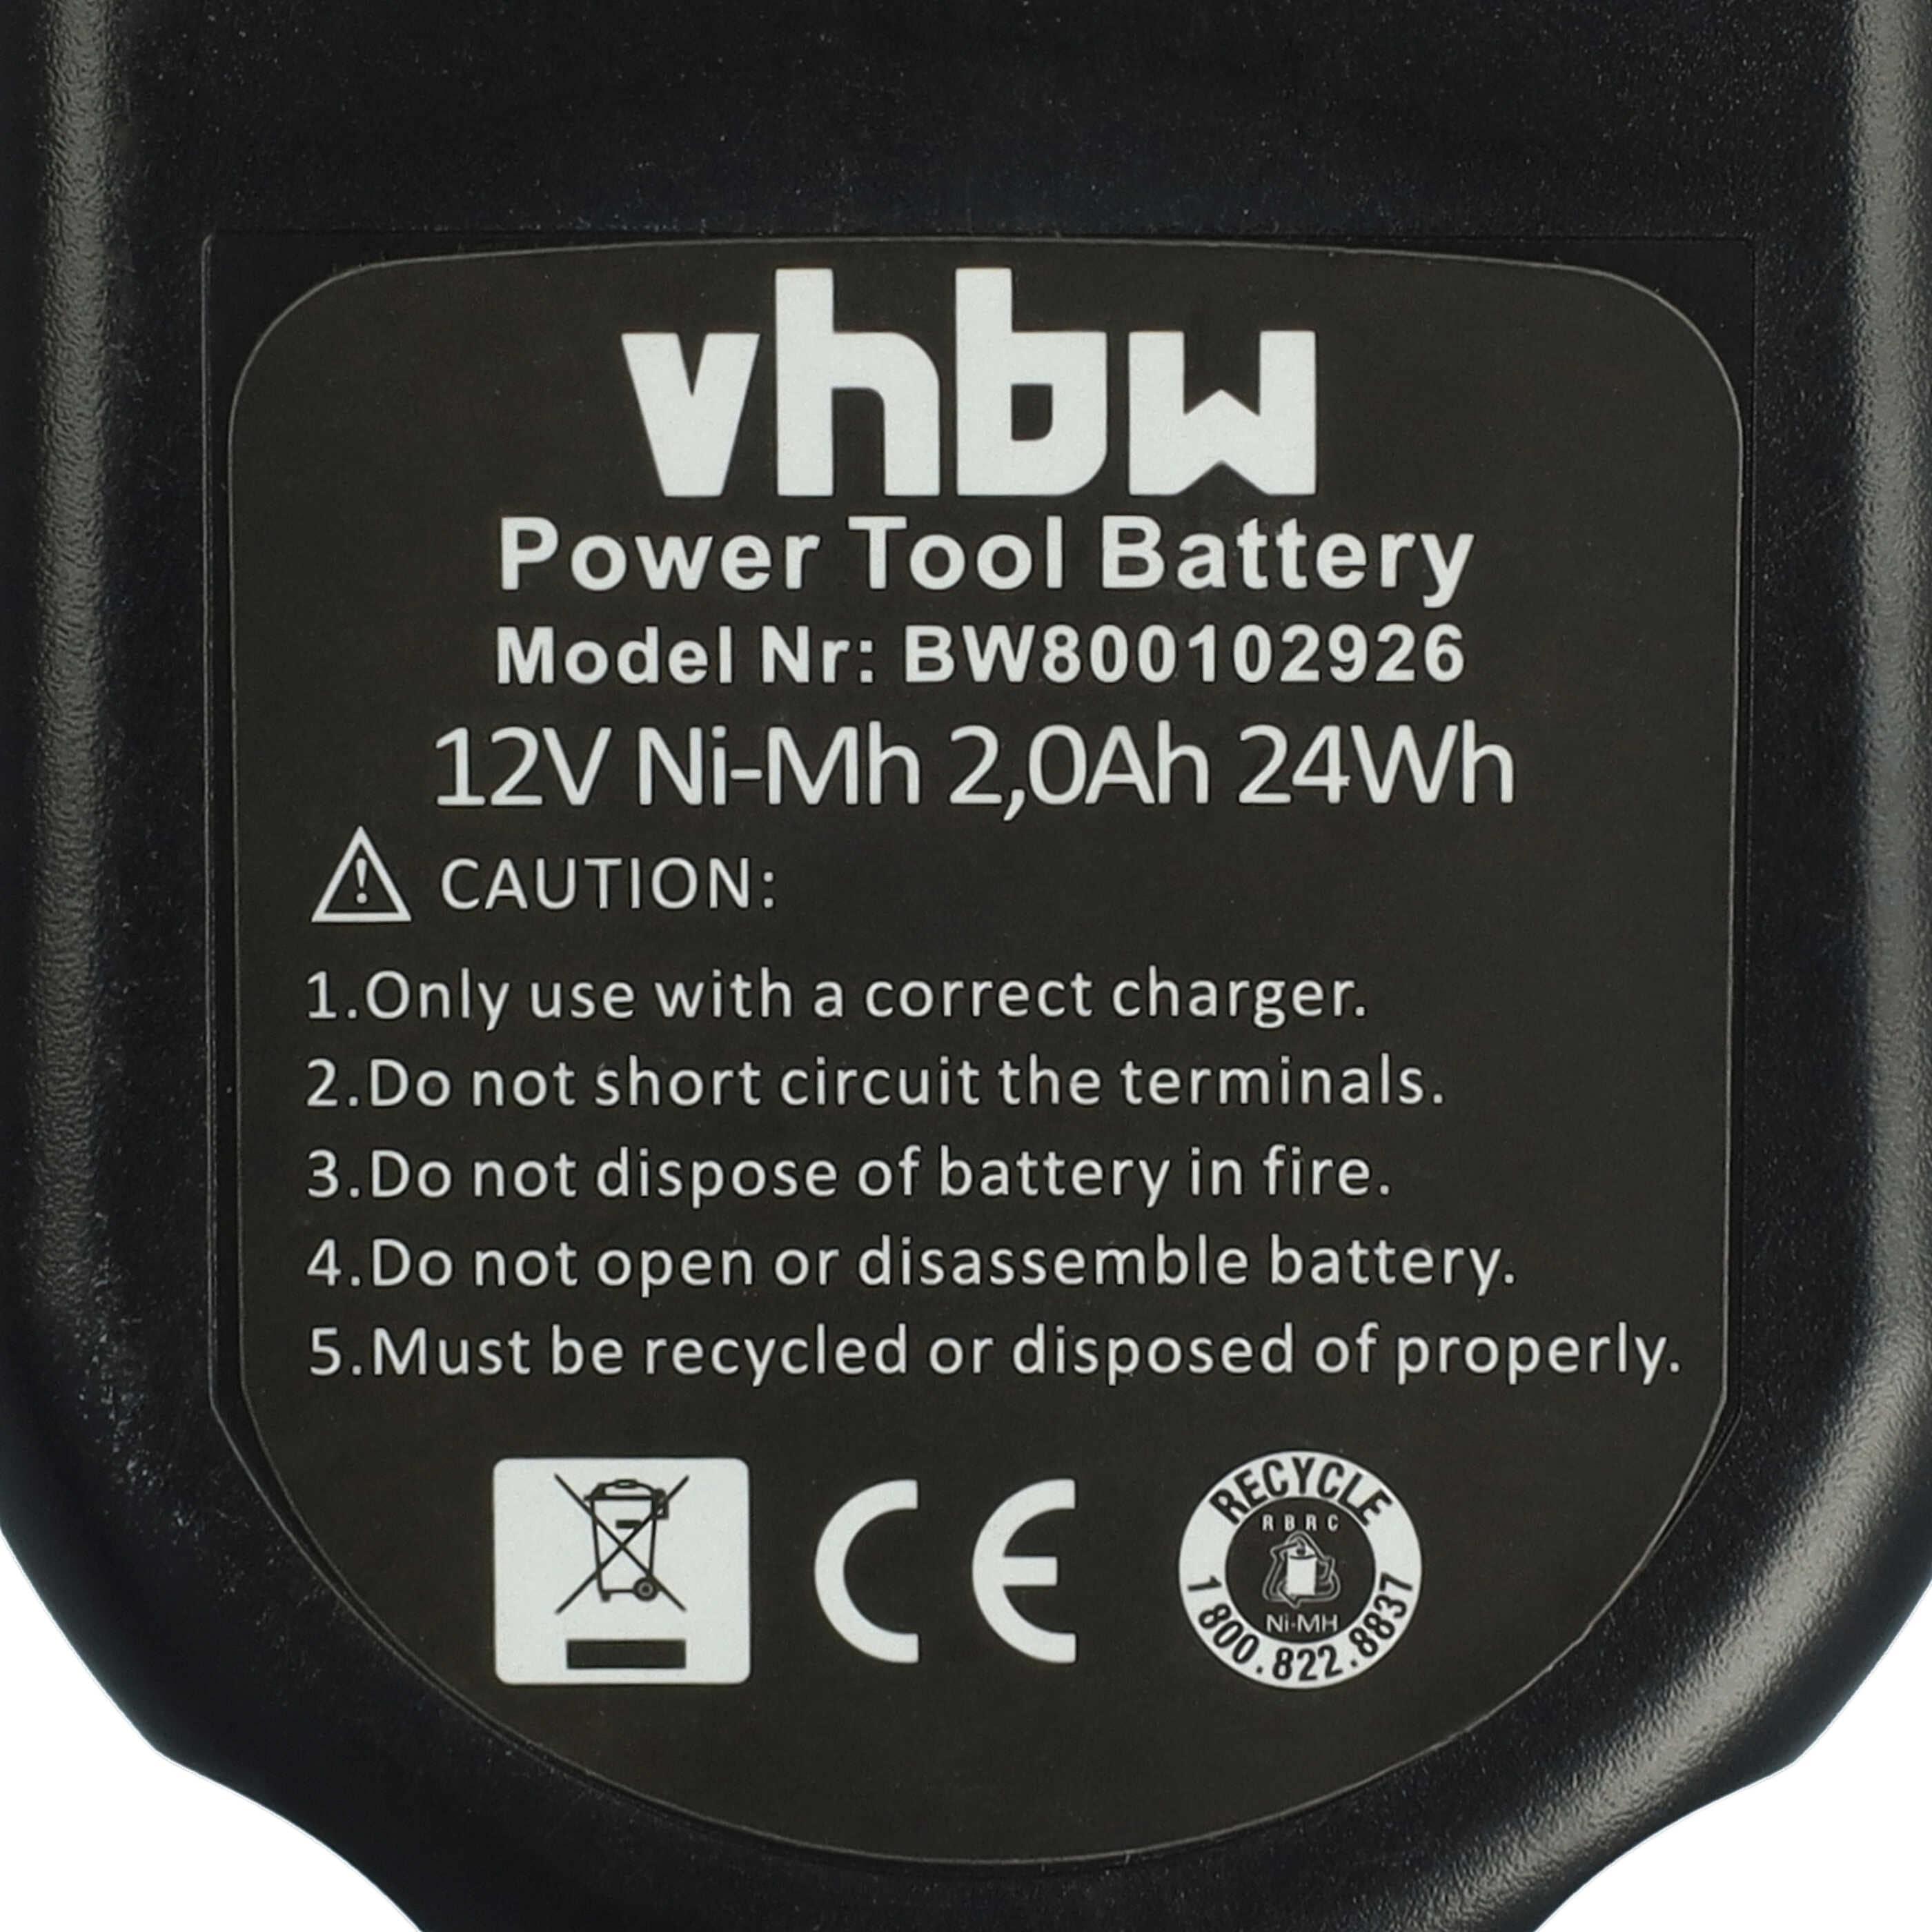 Electric Power Tool Battery Replaces Black & Decker A9266, A9275, A9252, FSL, CD, FS - 2000 mAh, 12 V, NiMH